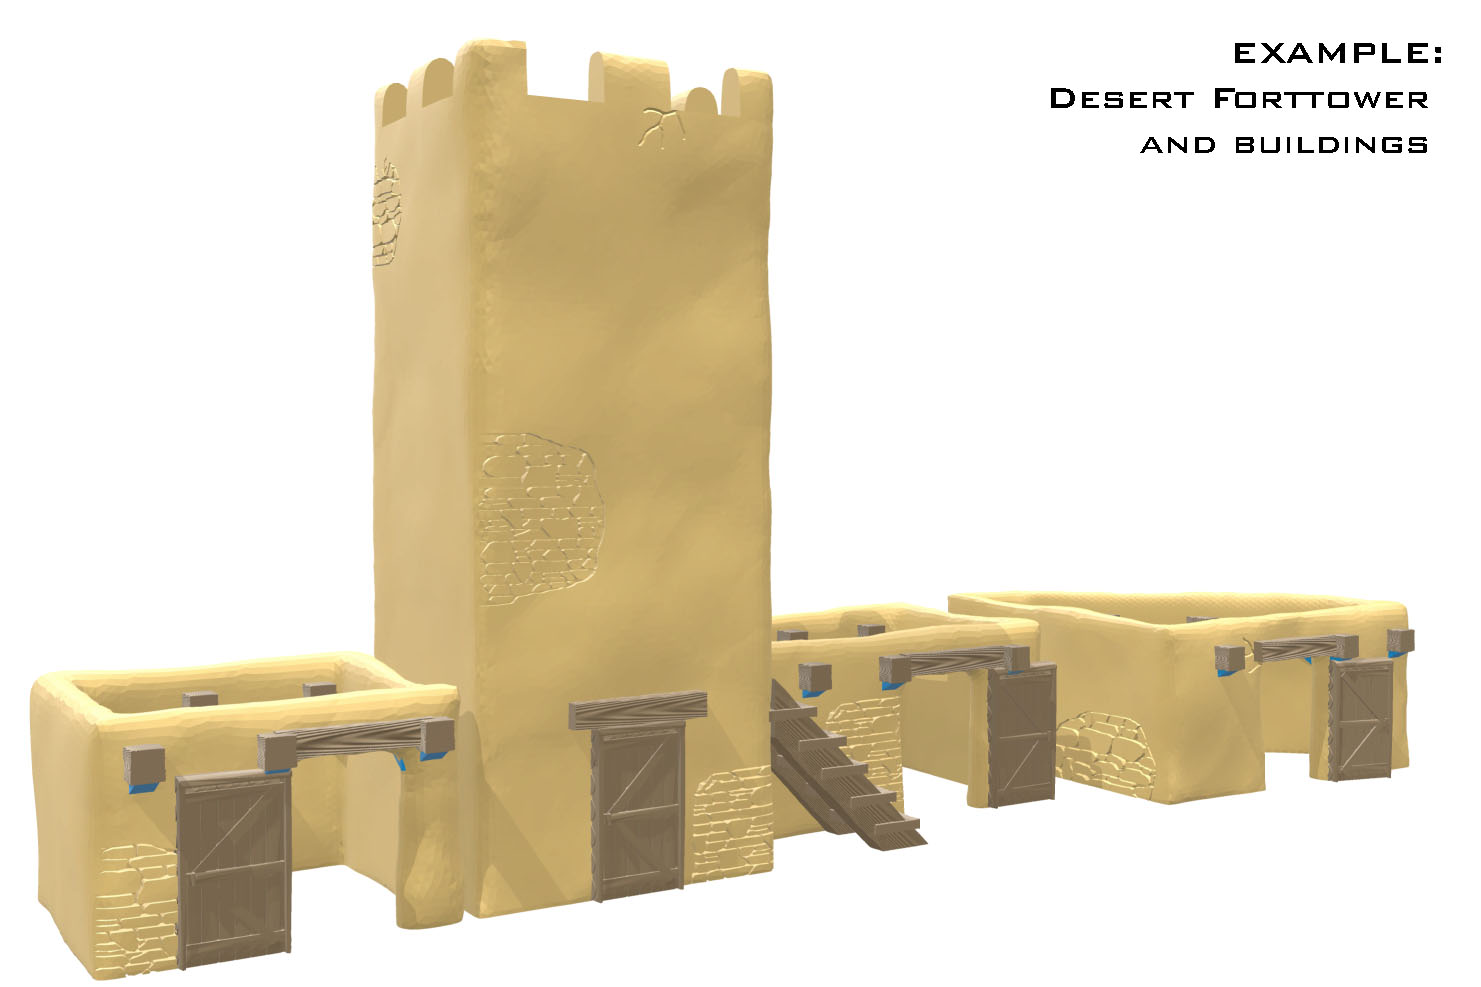 [Kickstarter] 3D printable modular castle/fortress and forts for Wargames / Tabletop  Fortbuildings